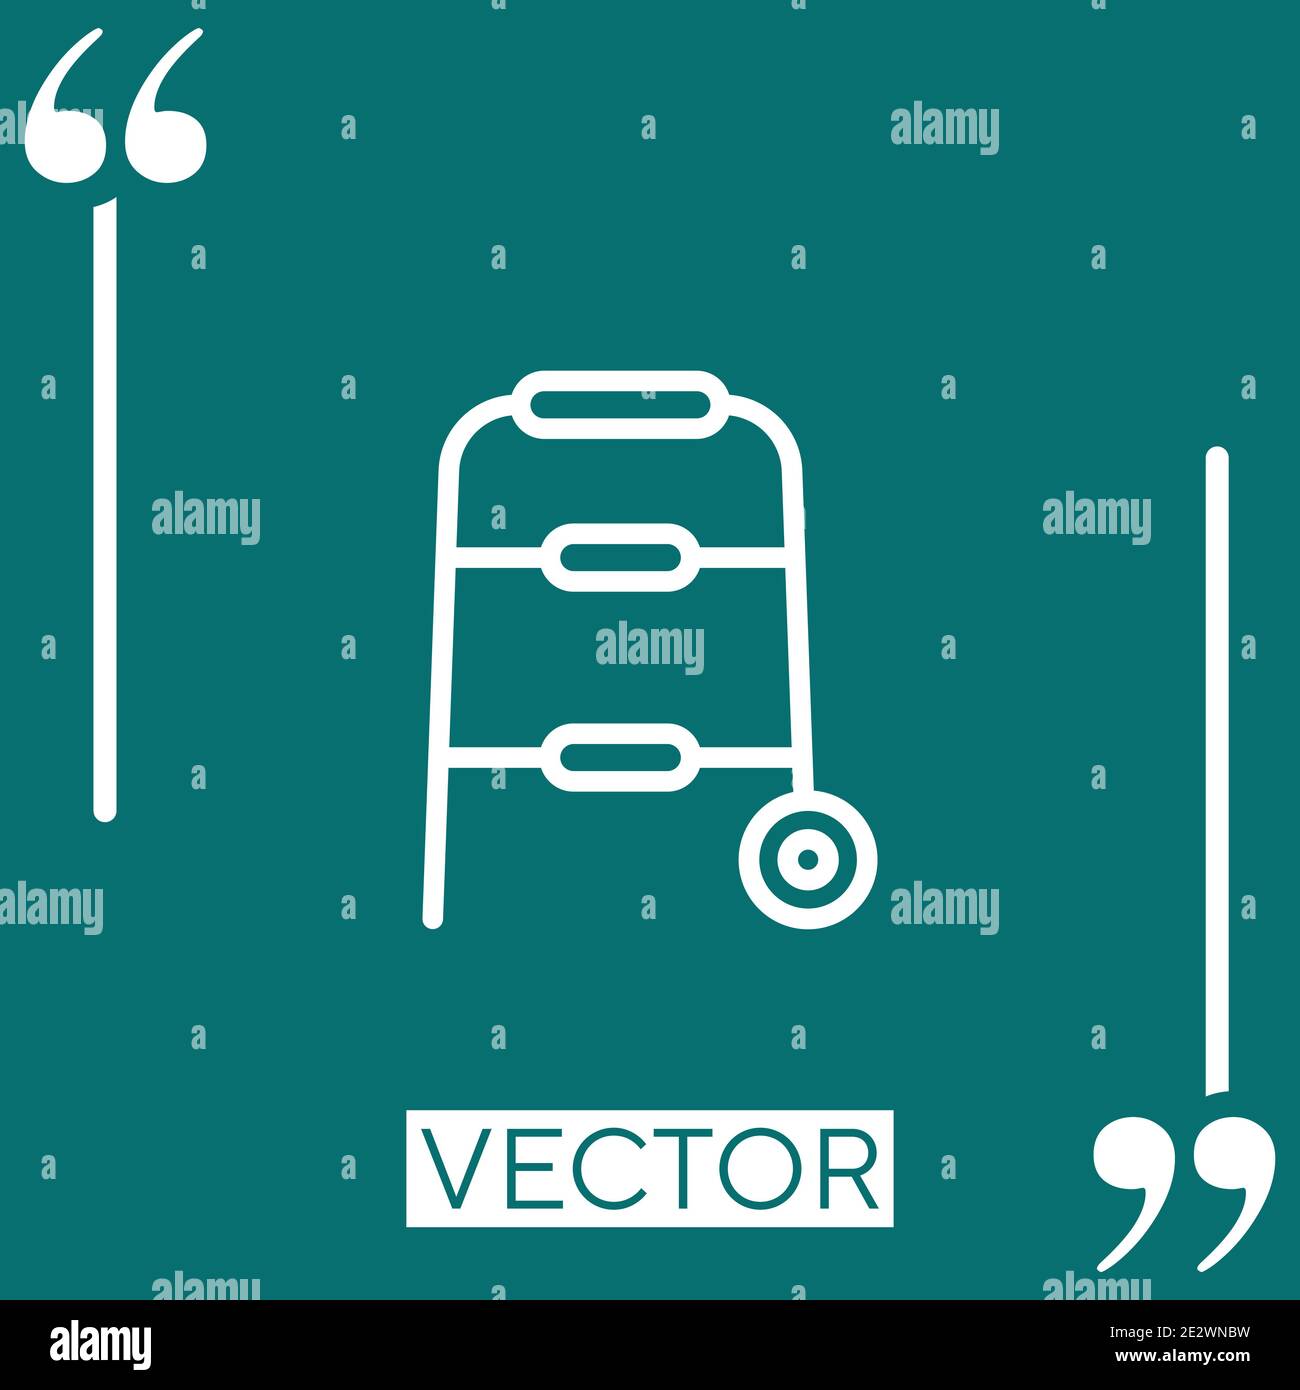 walker vector icon Linear icon. Editable stroke line Stock Vector